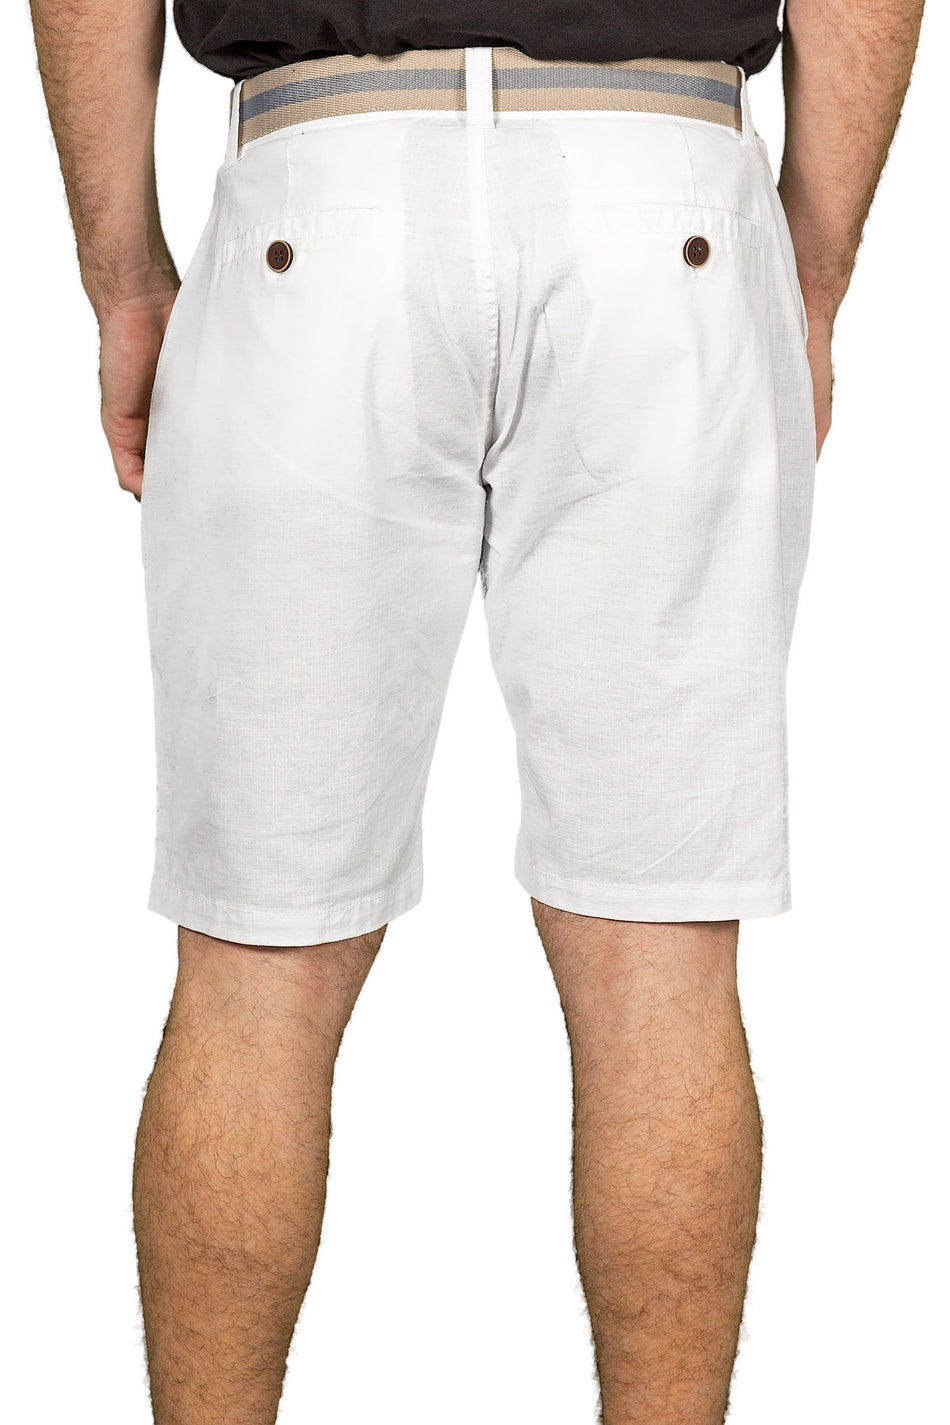 173101-white-flat-front-shorts